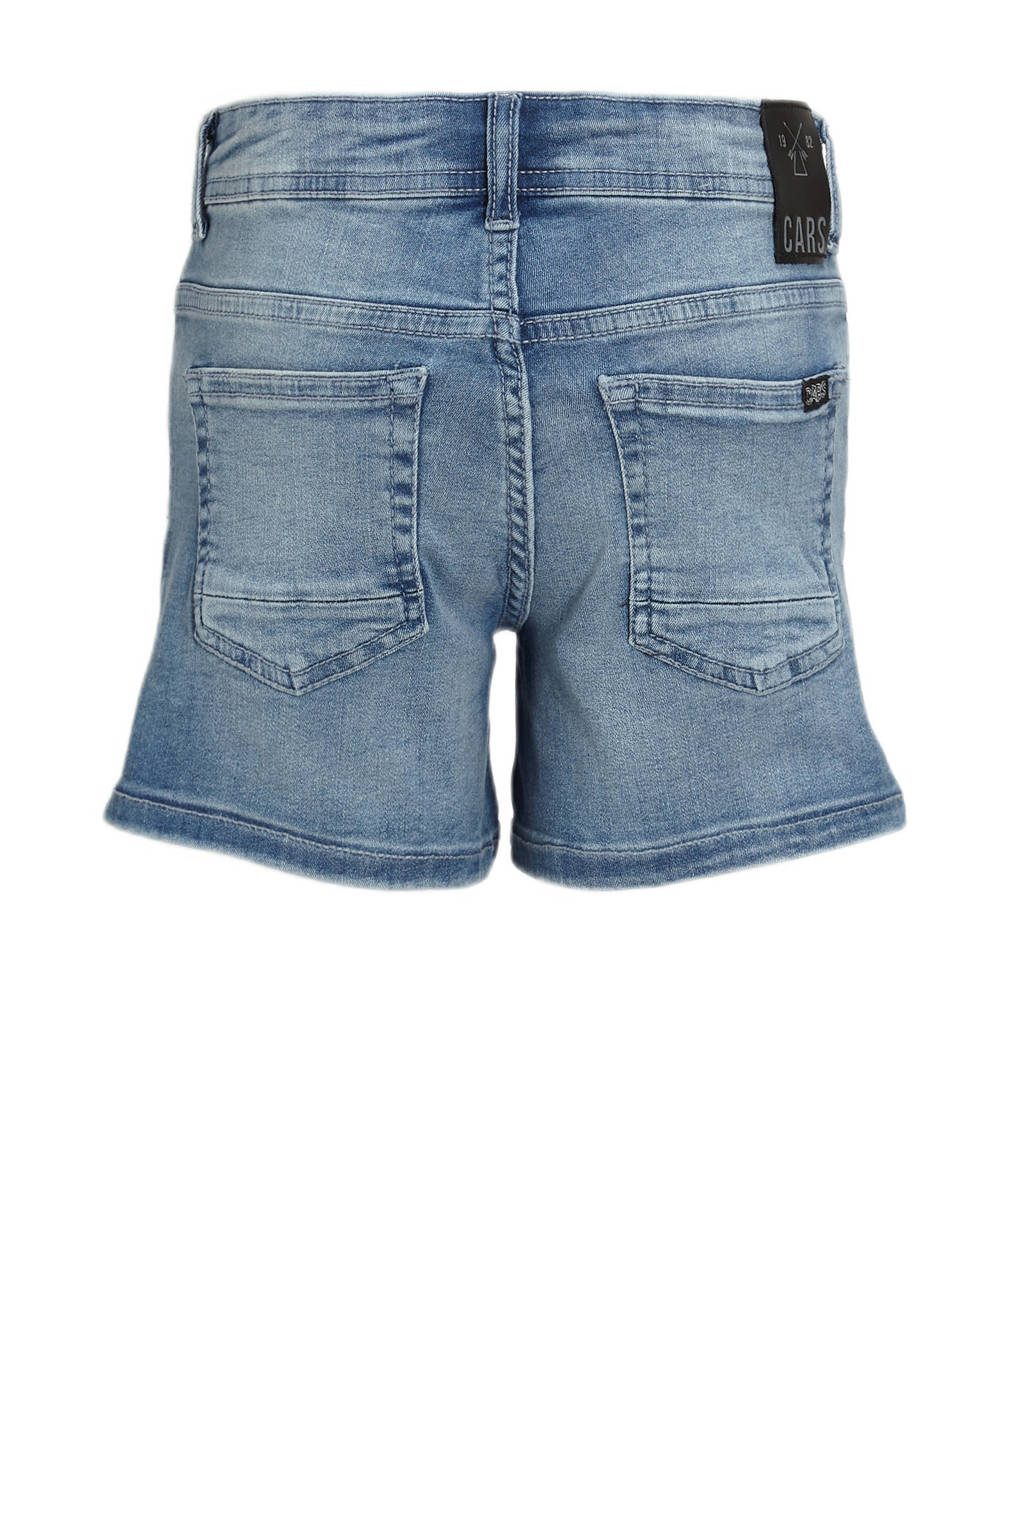 Cars jeans short Neytiri bleached | kleertjes.com